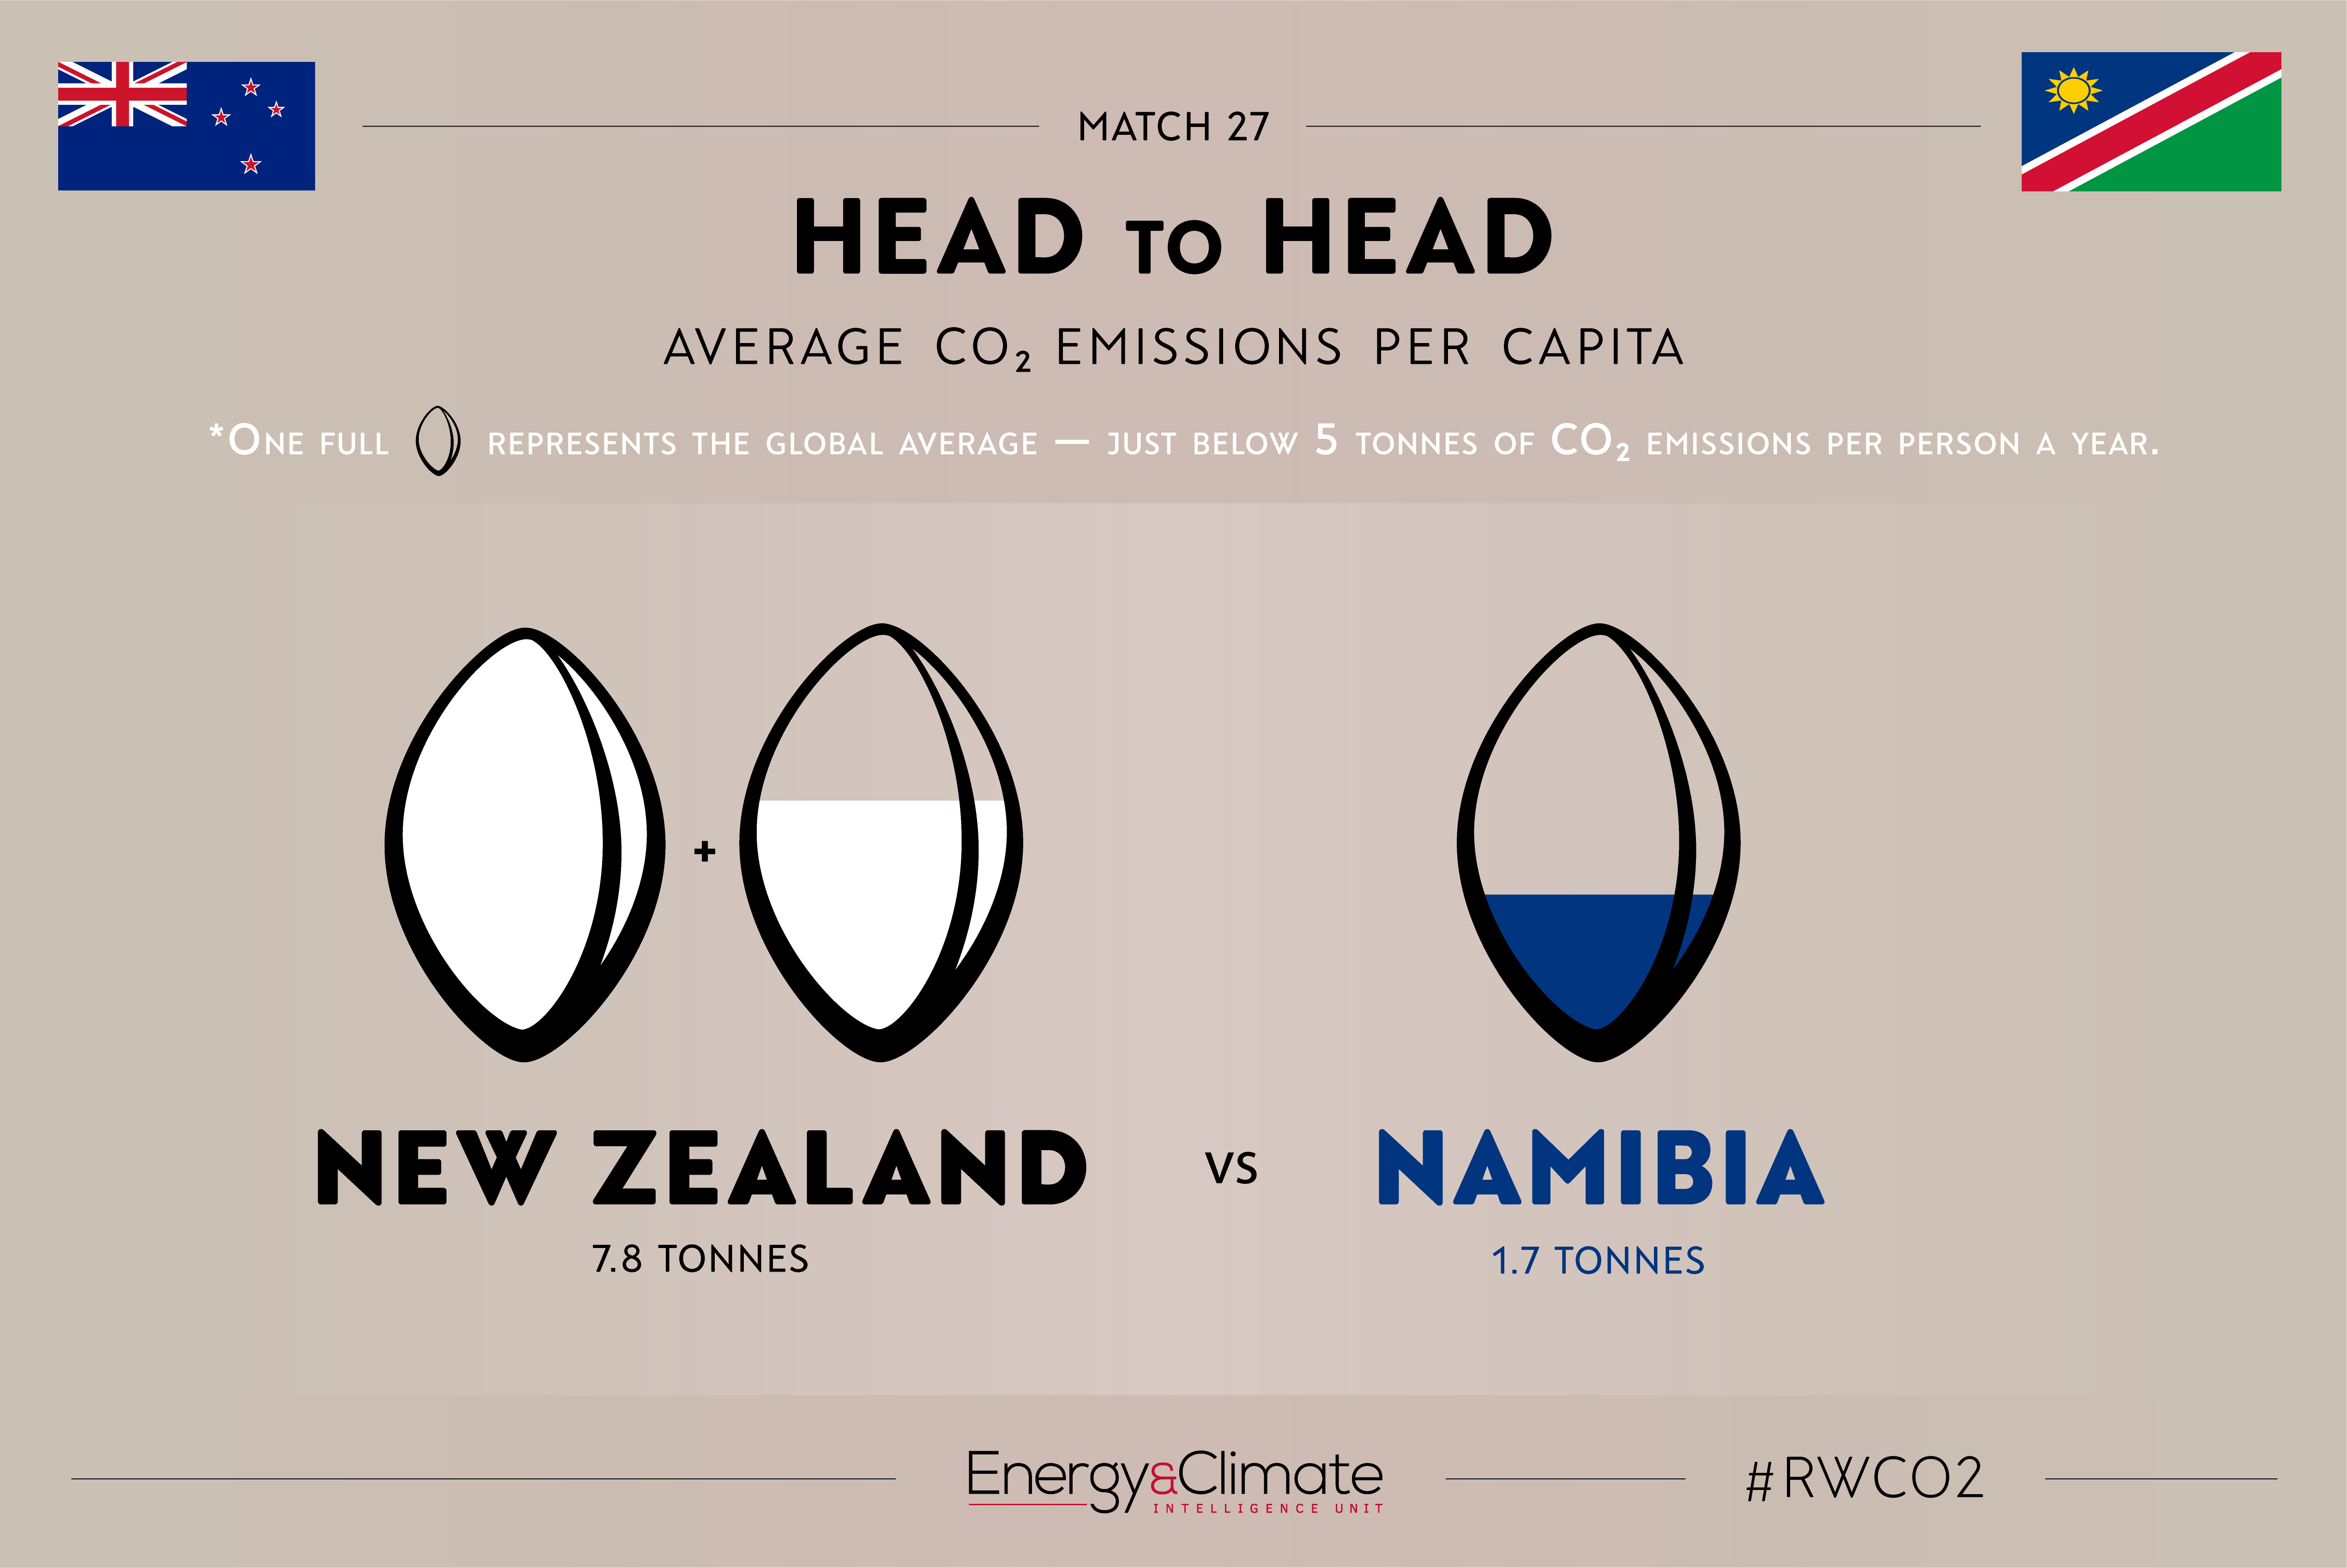 New Zealand v Namibia per capita emissions